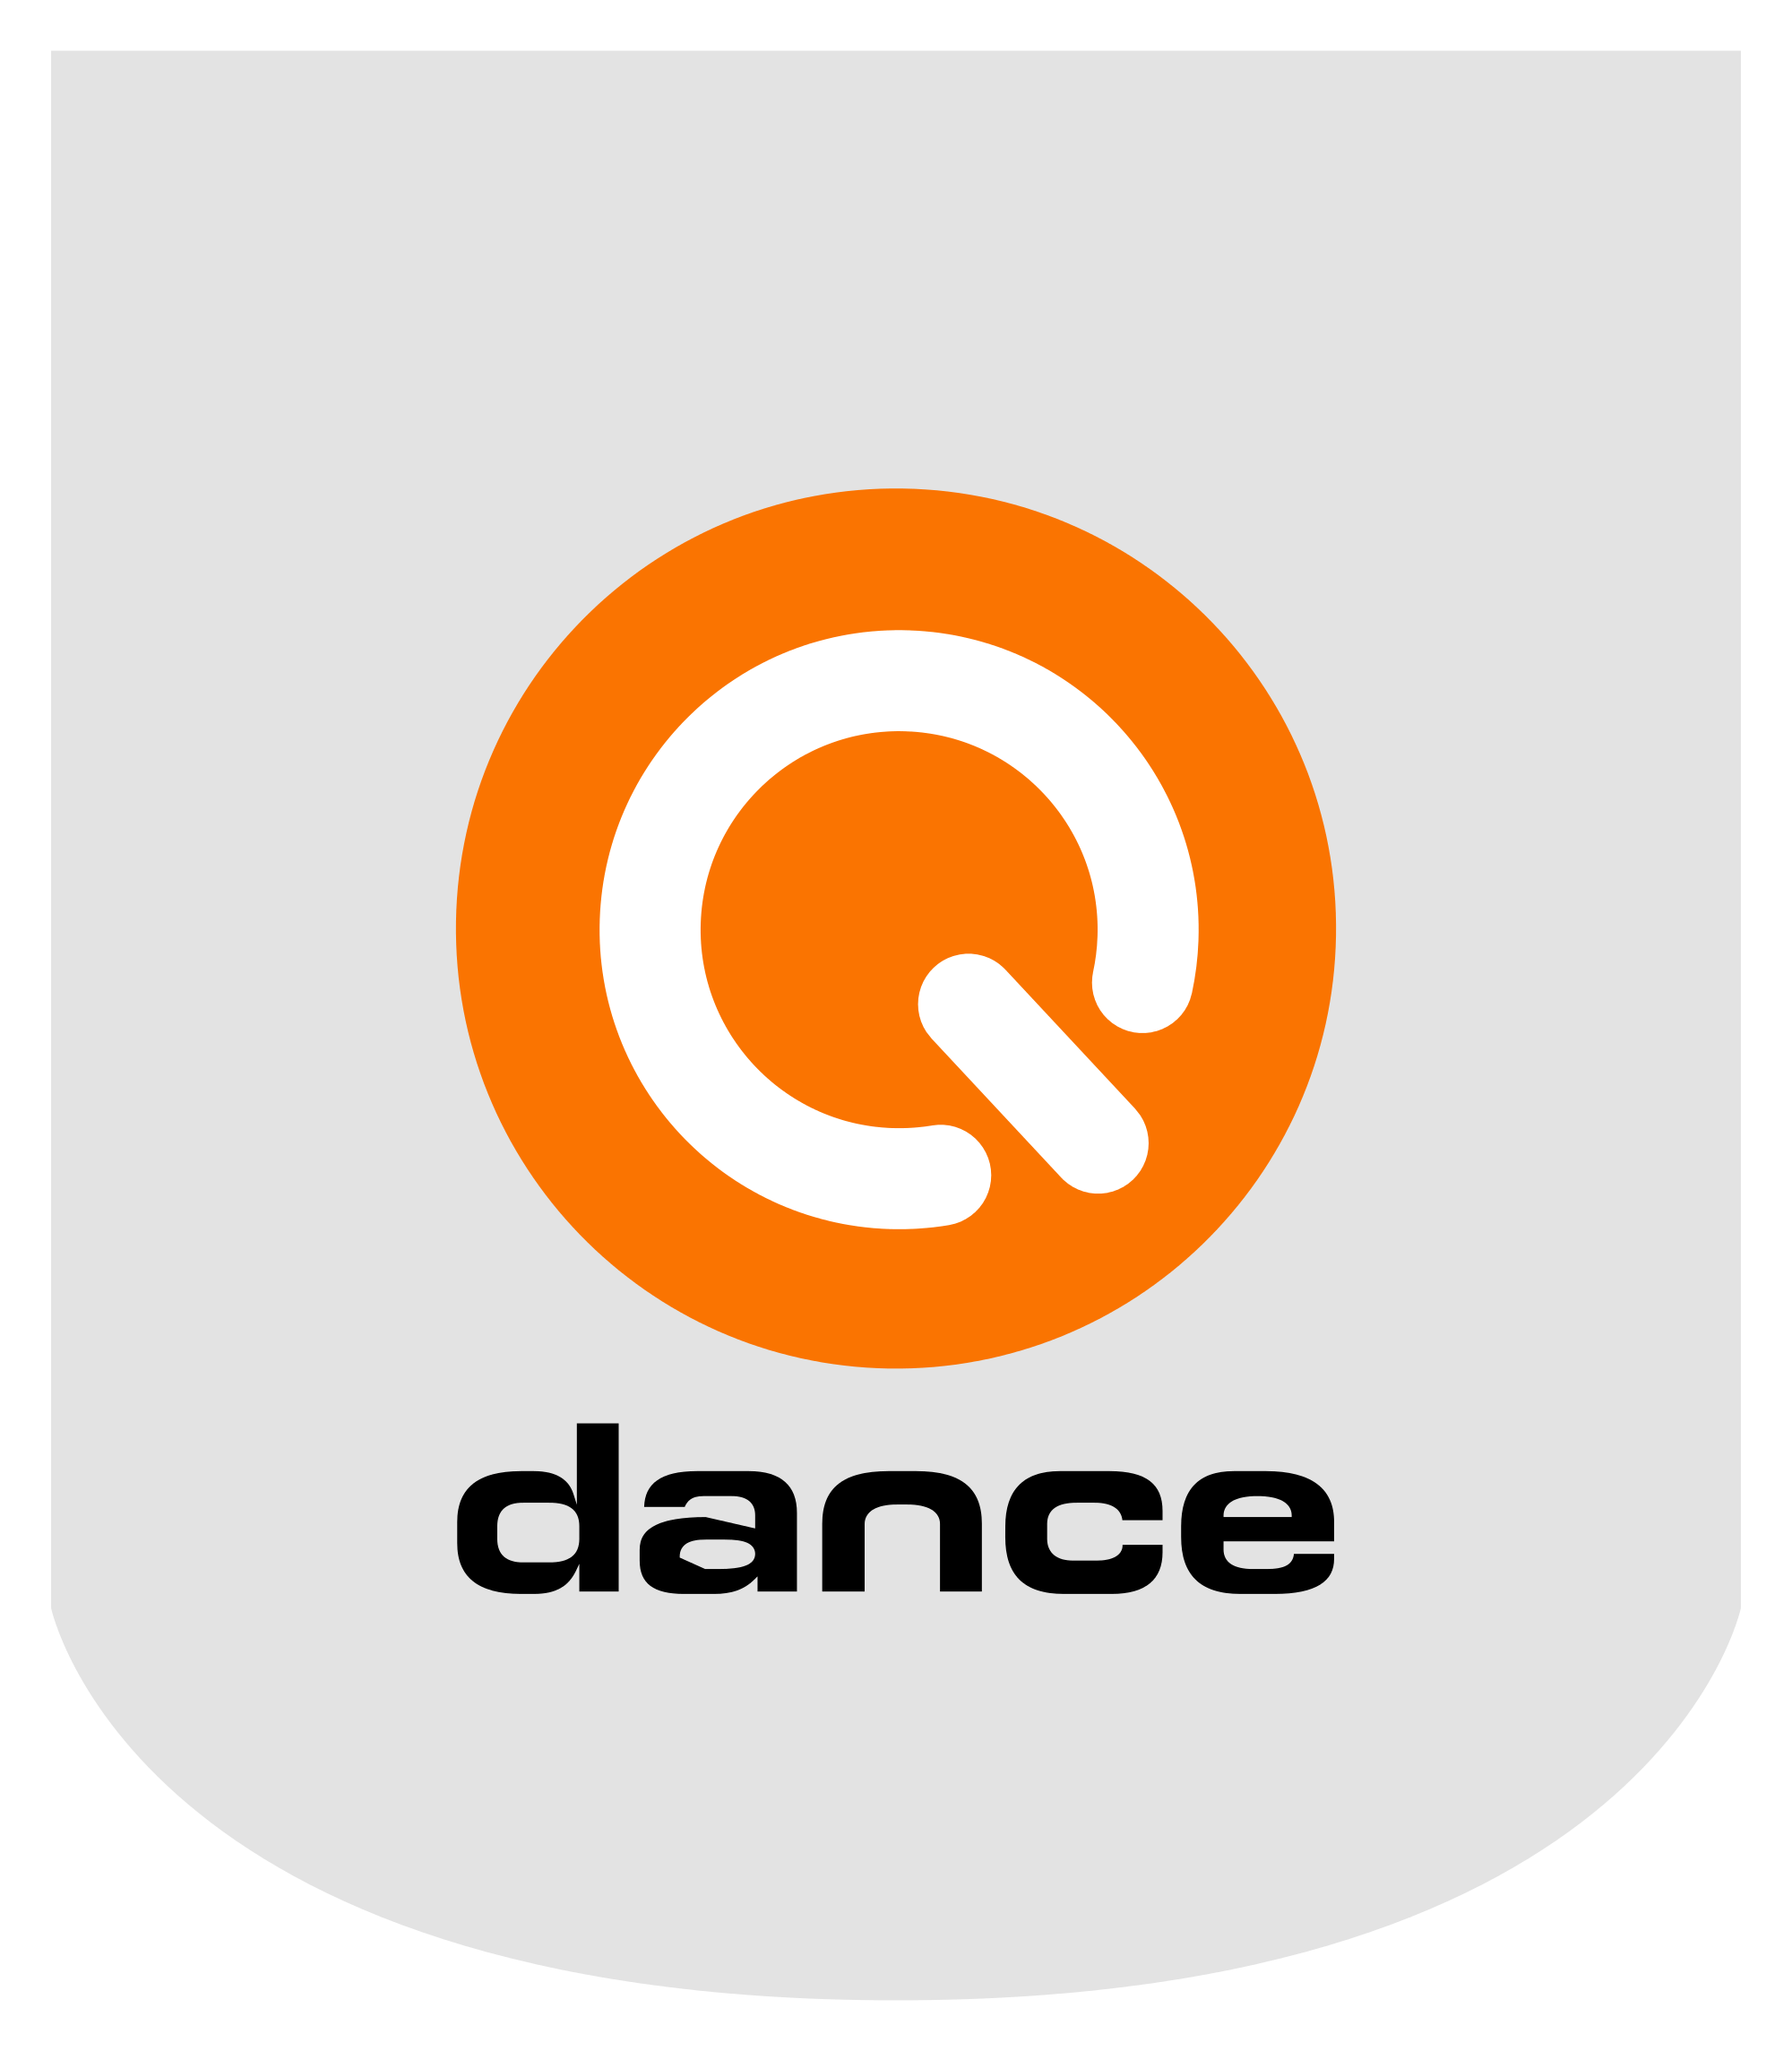 Q Symbol in Logo - File:Q-Dance logo.svg - Wikimedia Commons